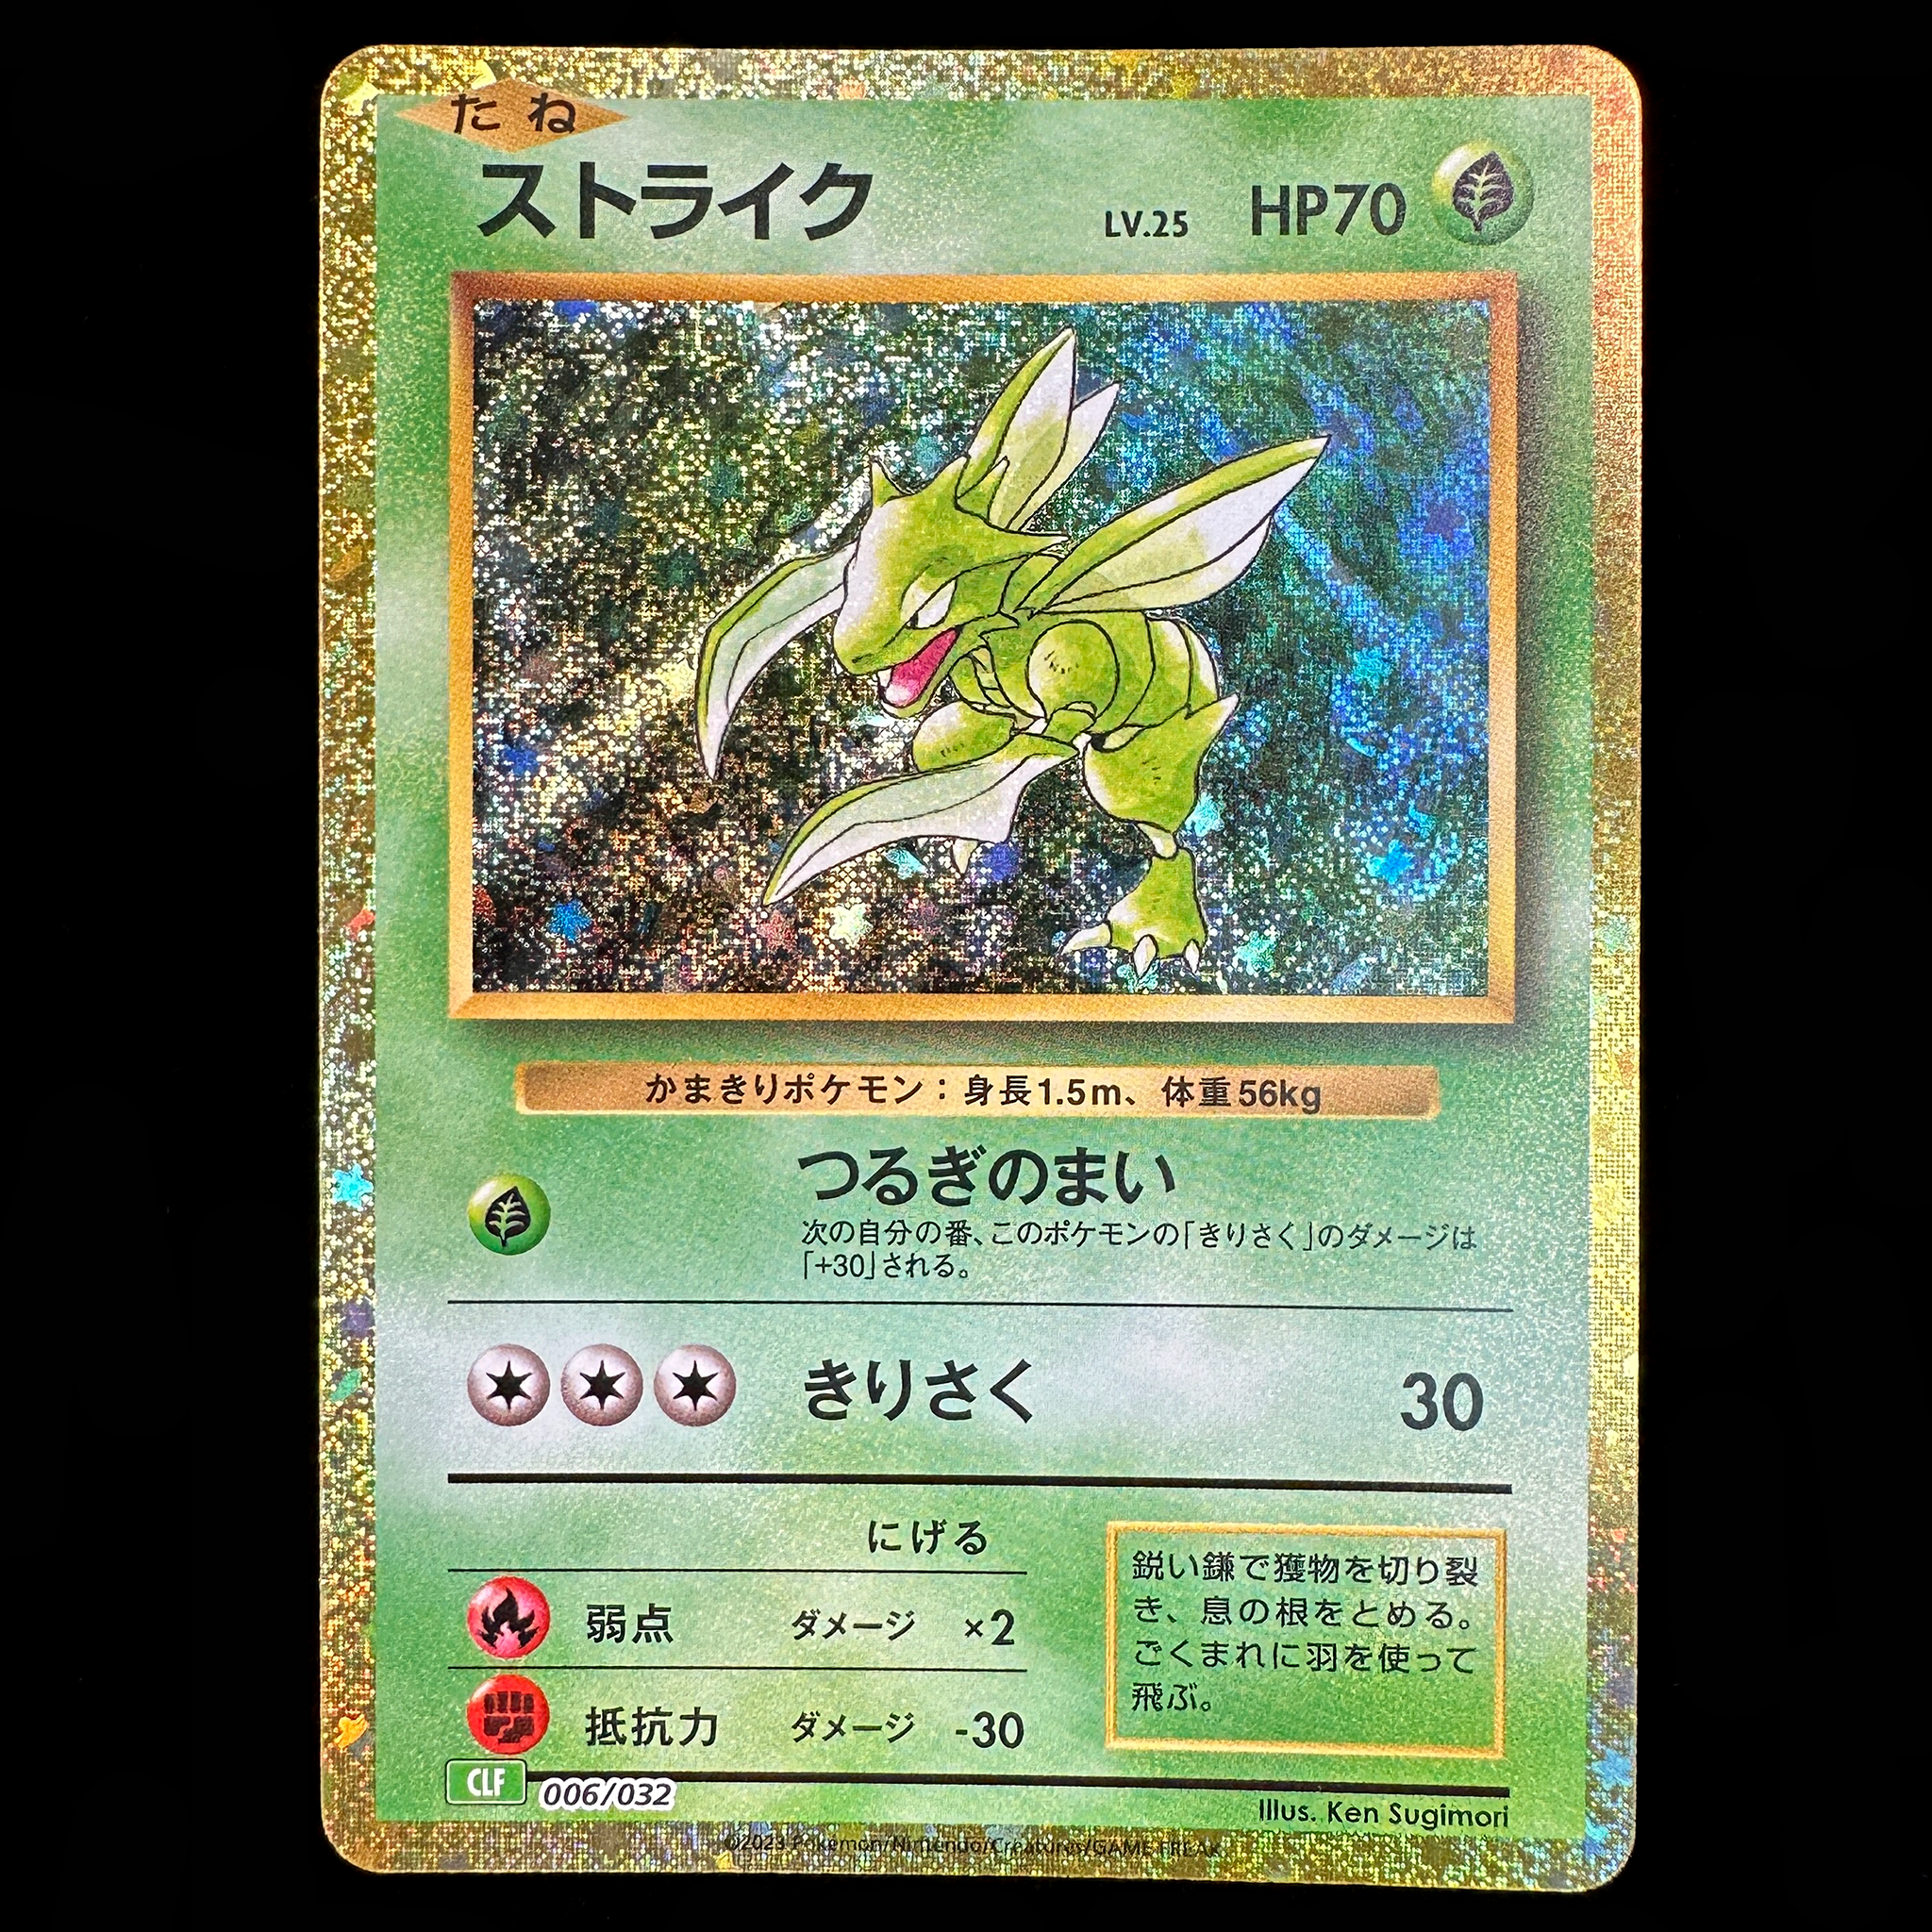 20 - Clow Card: The Move (移) - Carta Clow: Movimento - Pokémon